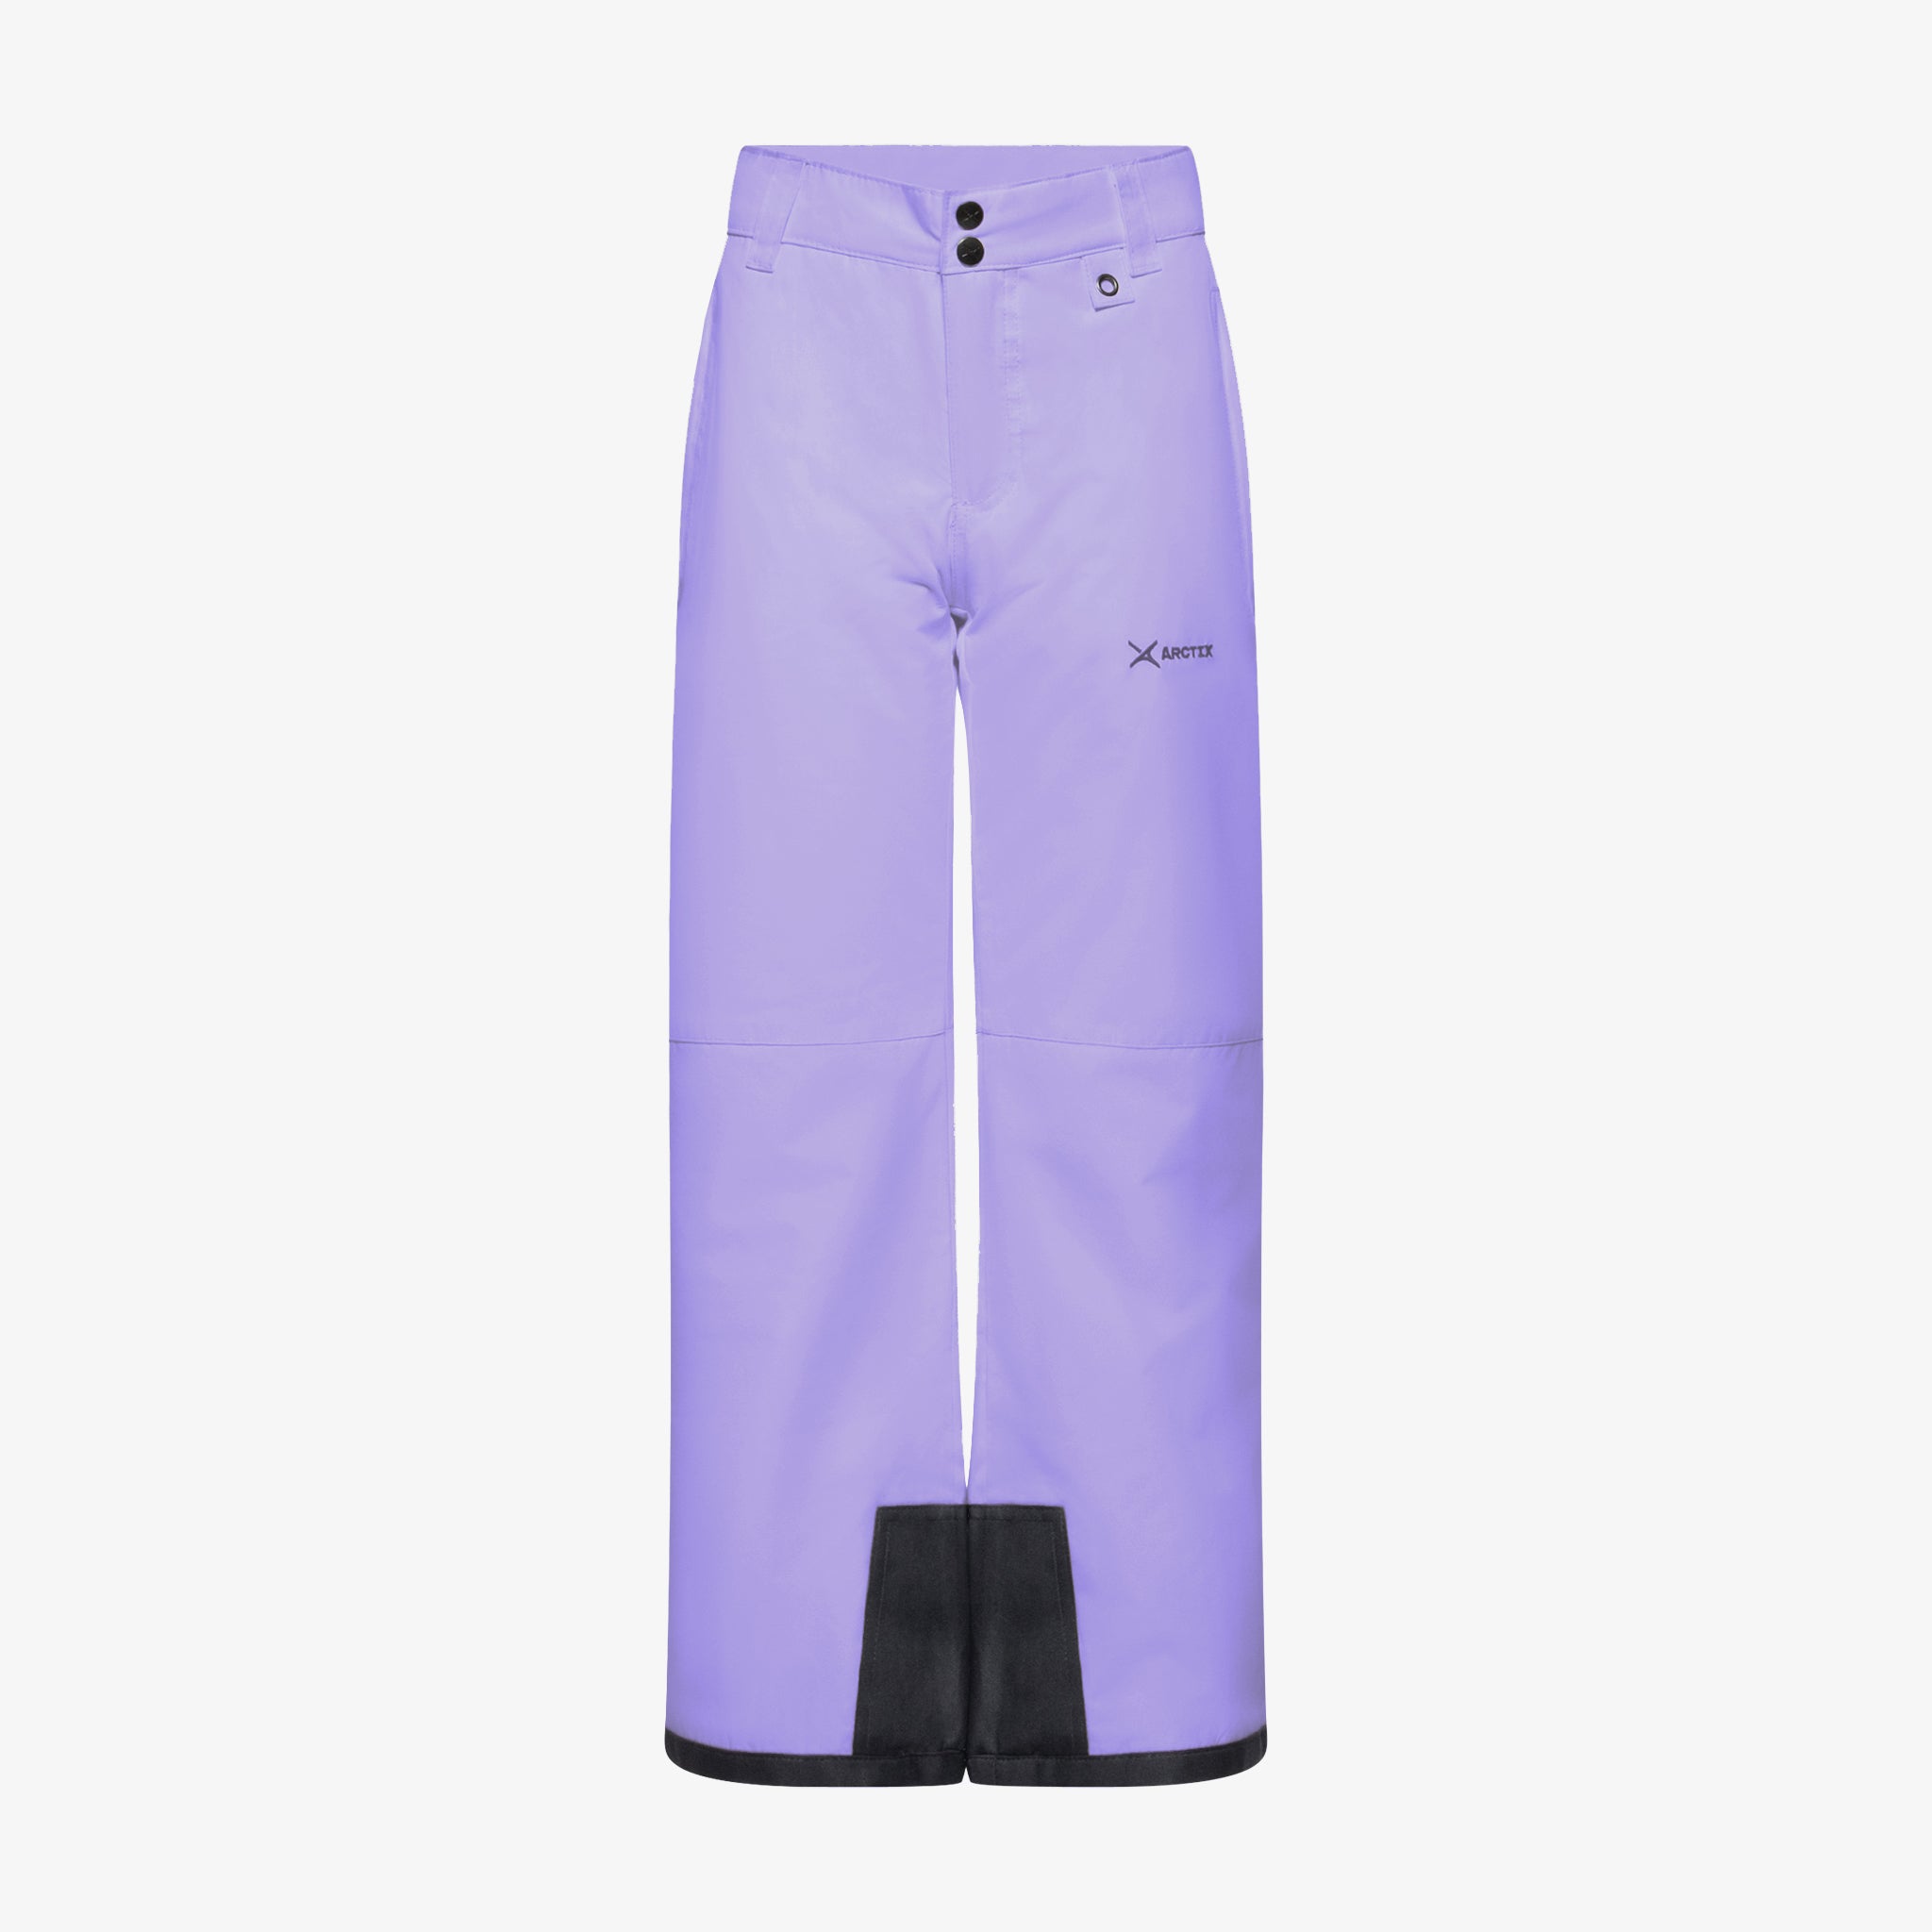 Arctix Women's Insulated Cargo Snowsports Pants, Purple, L 